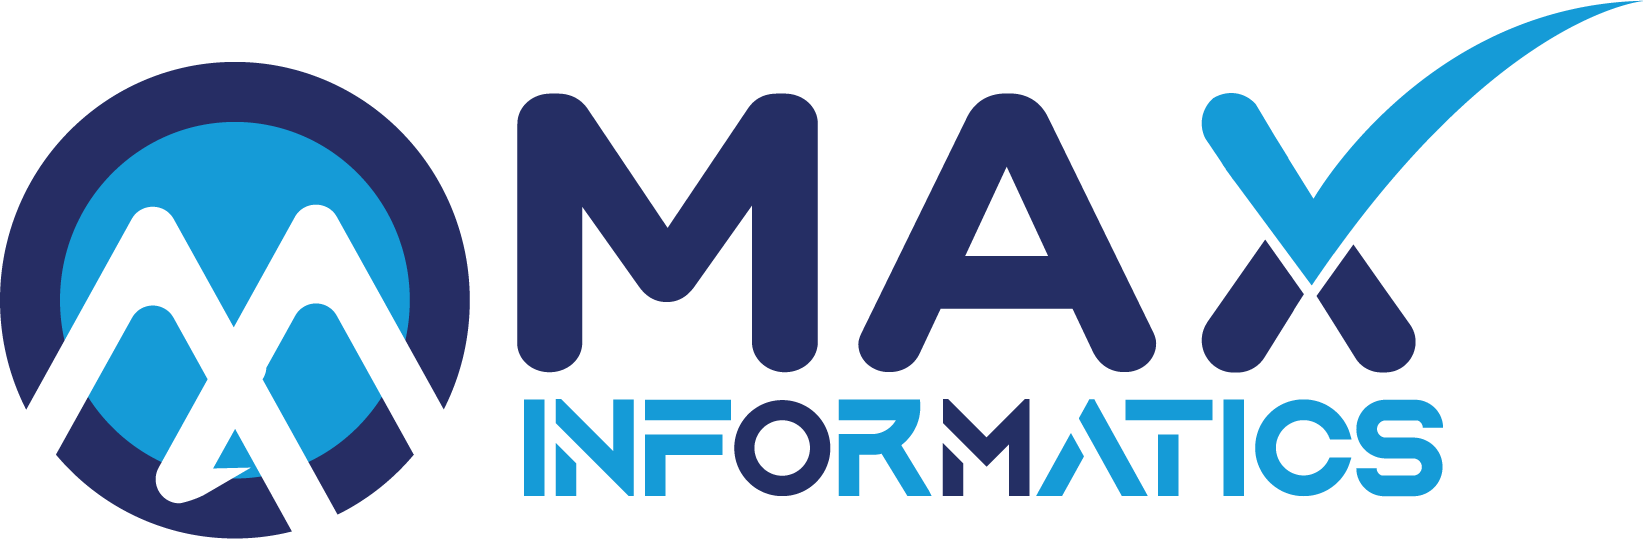 OMAX Informatics